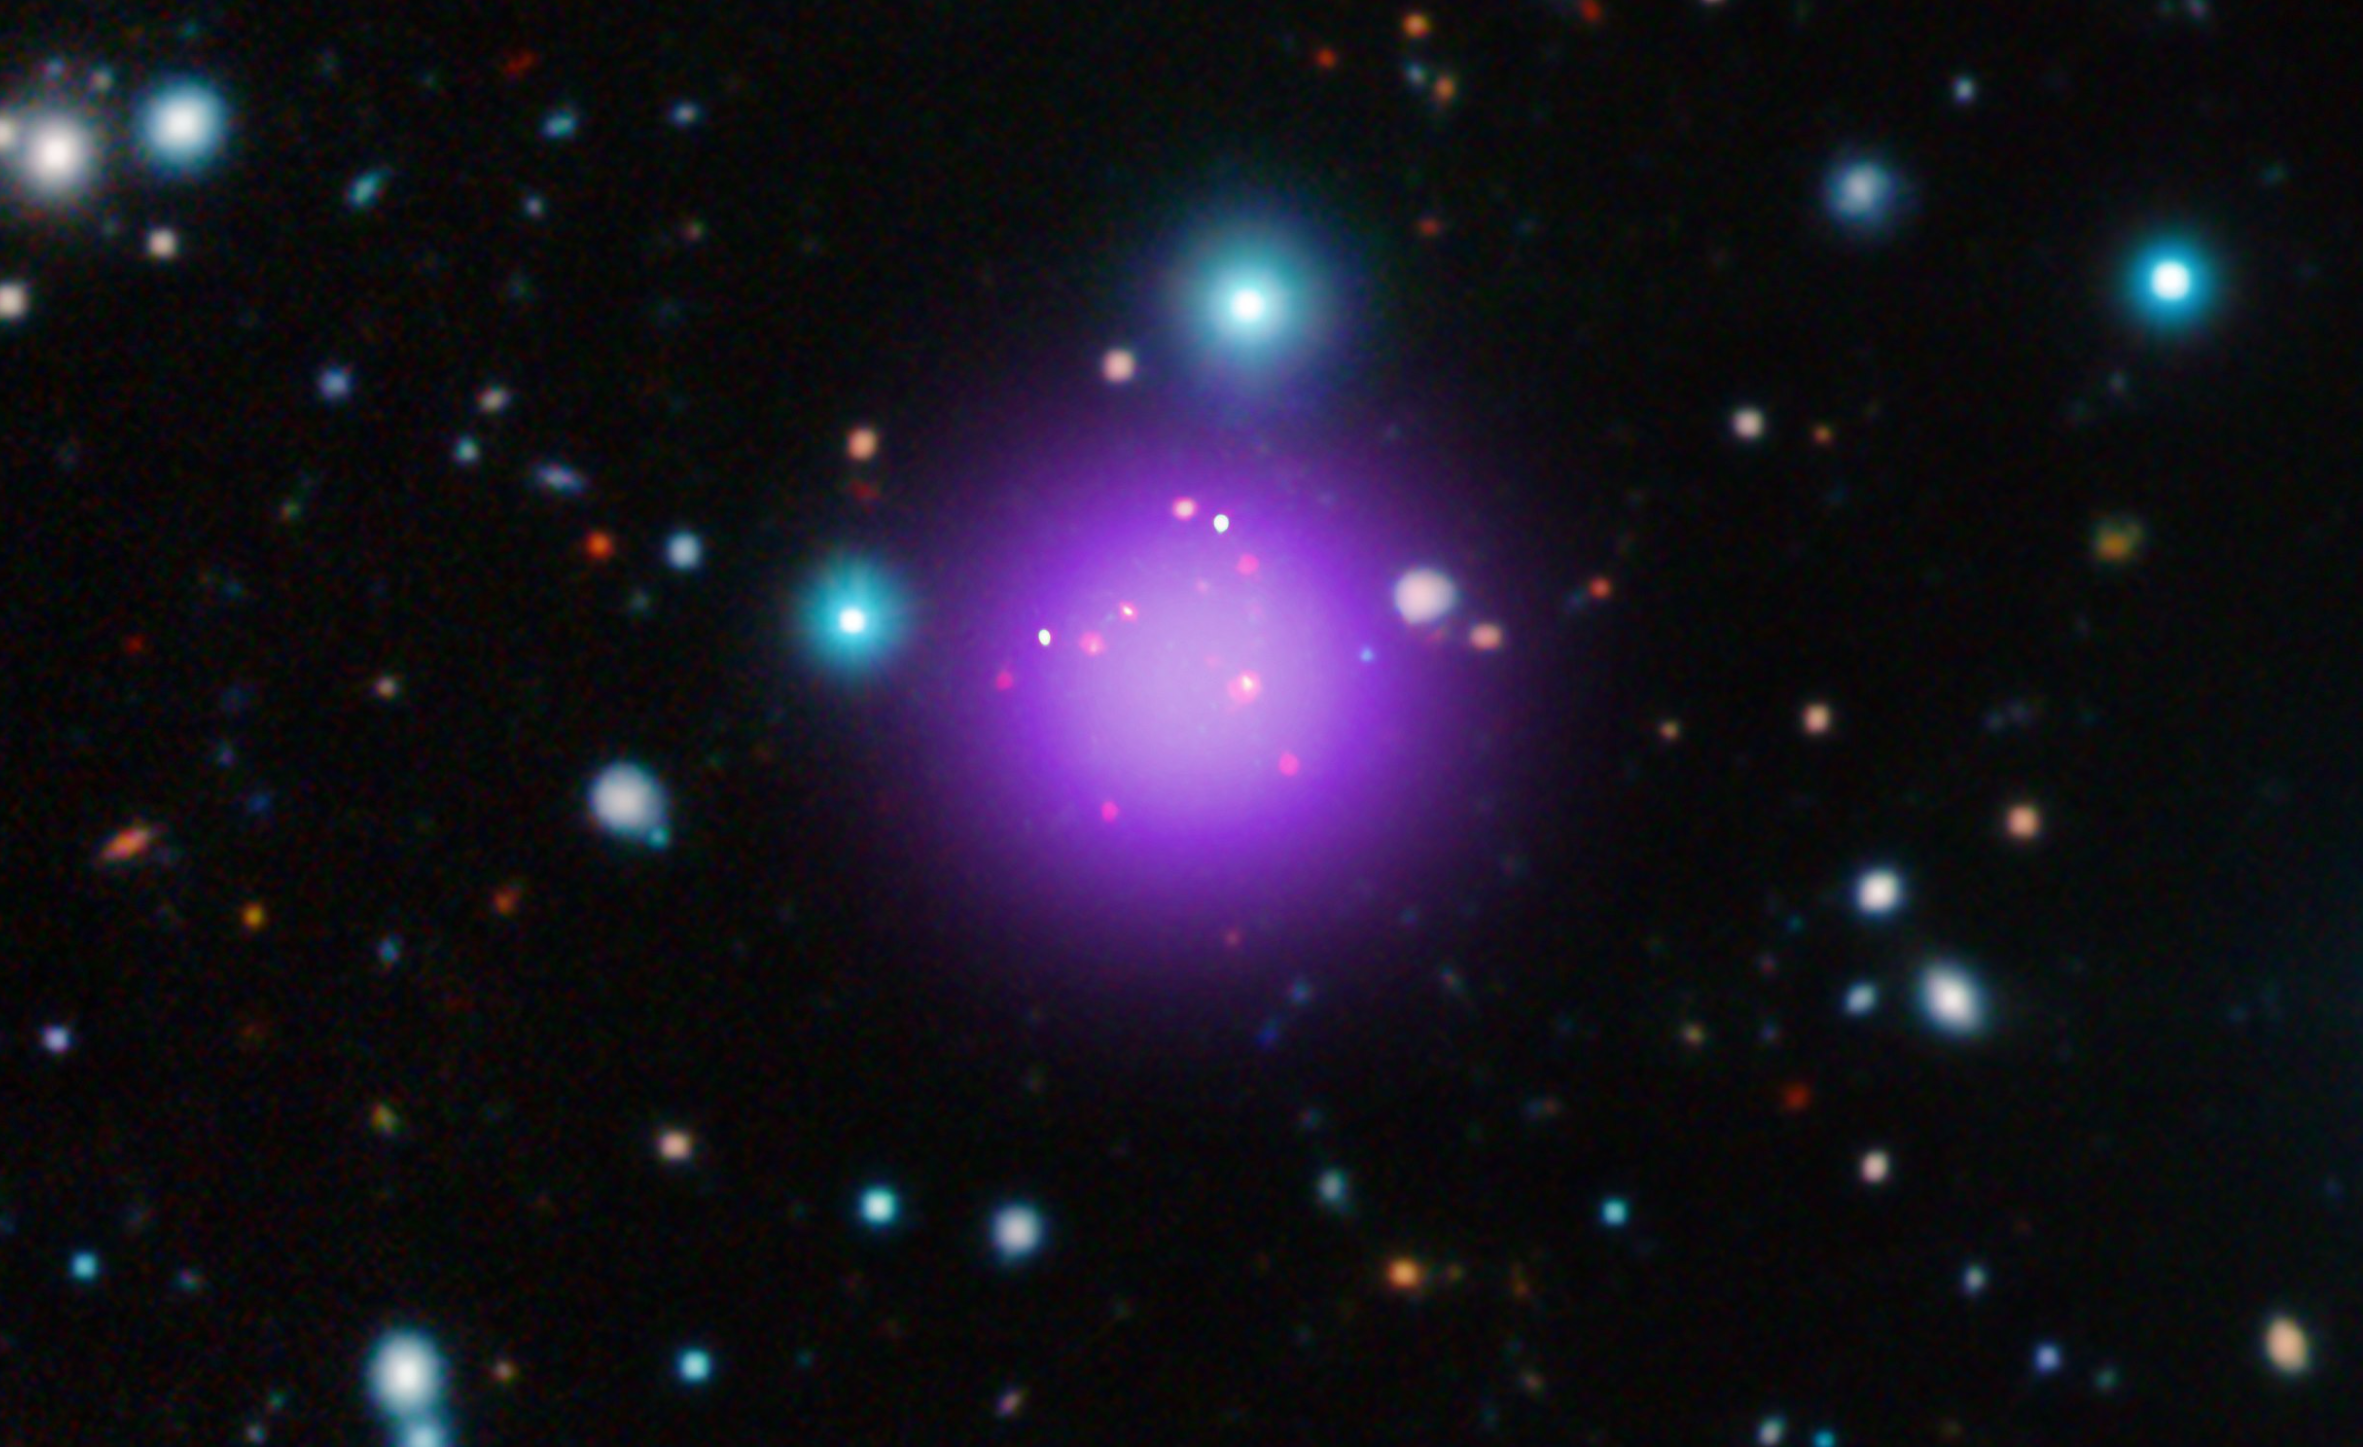 James Webb teleskop otkriva tajne svemira kroz uvid u daleki skup galaksija